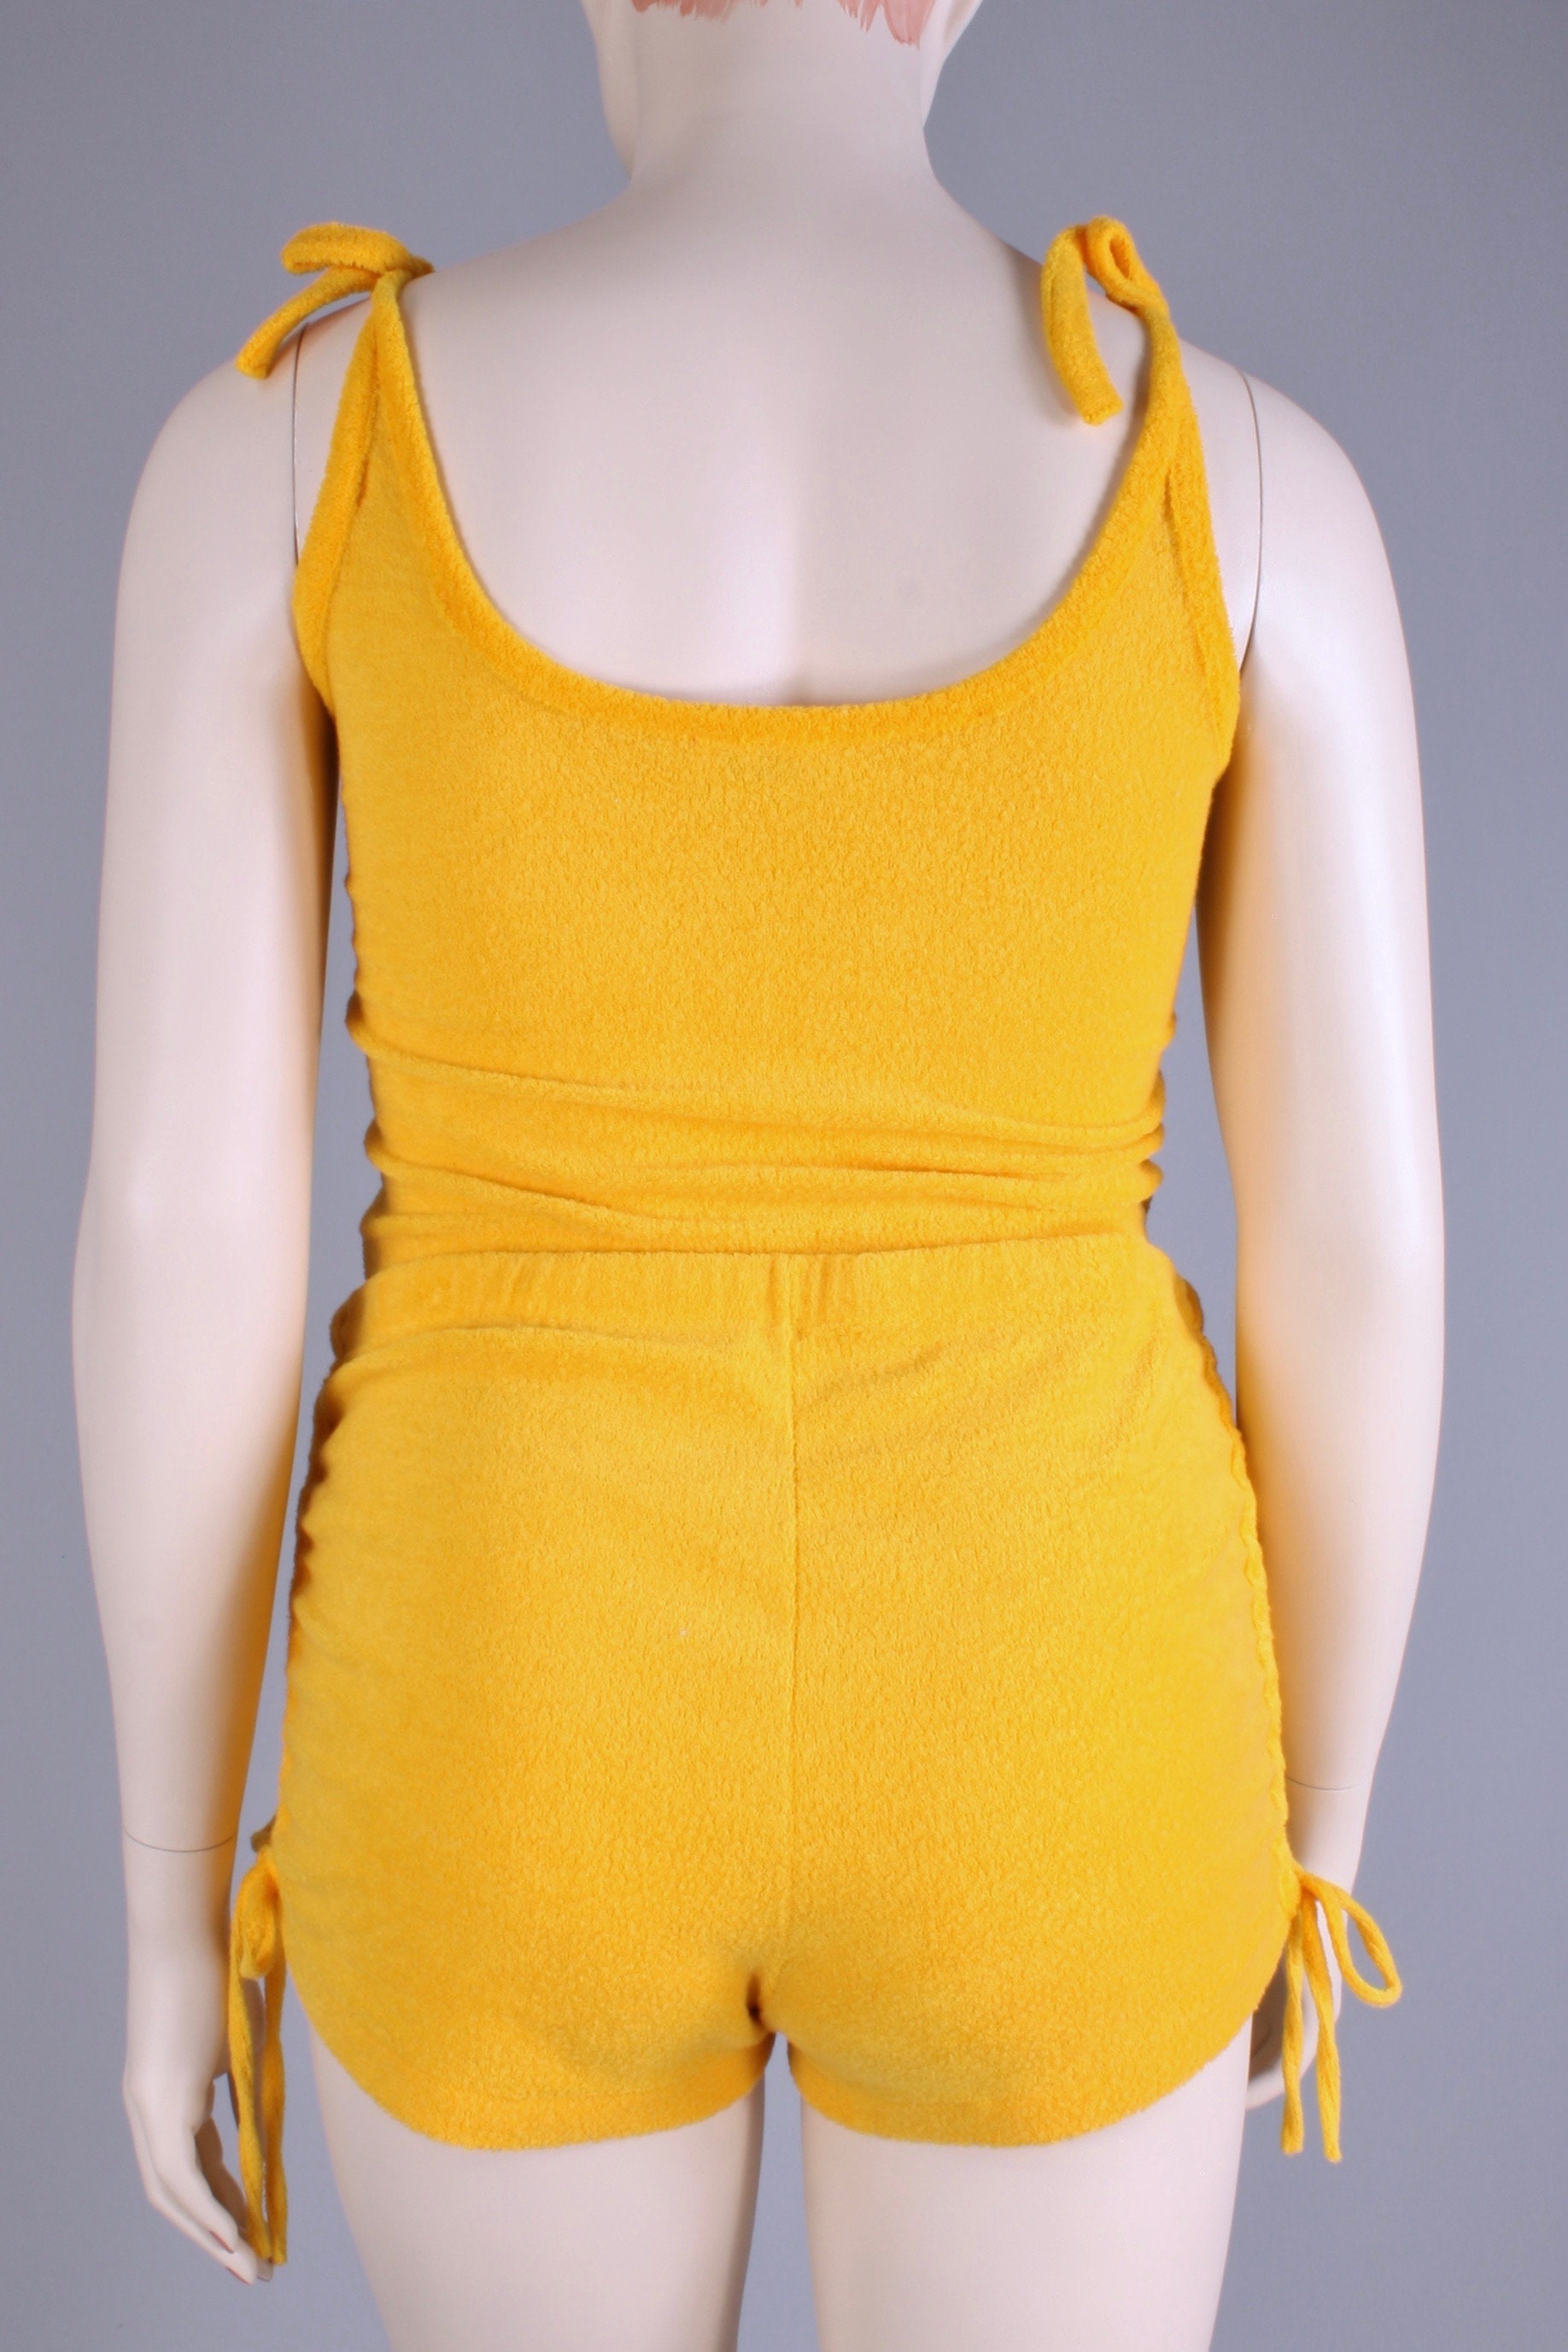 L XL Vintage 1970s K Mart Yellow Terry Cloth Beach Shorts Crop | Etsy